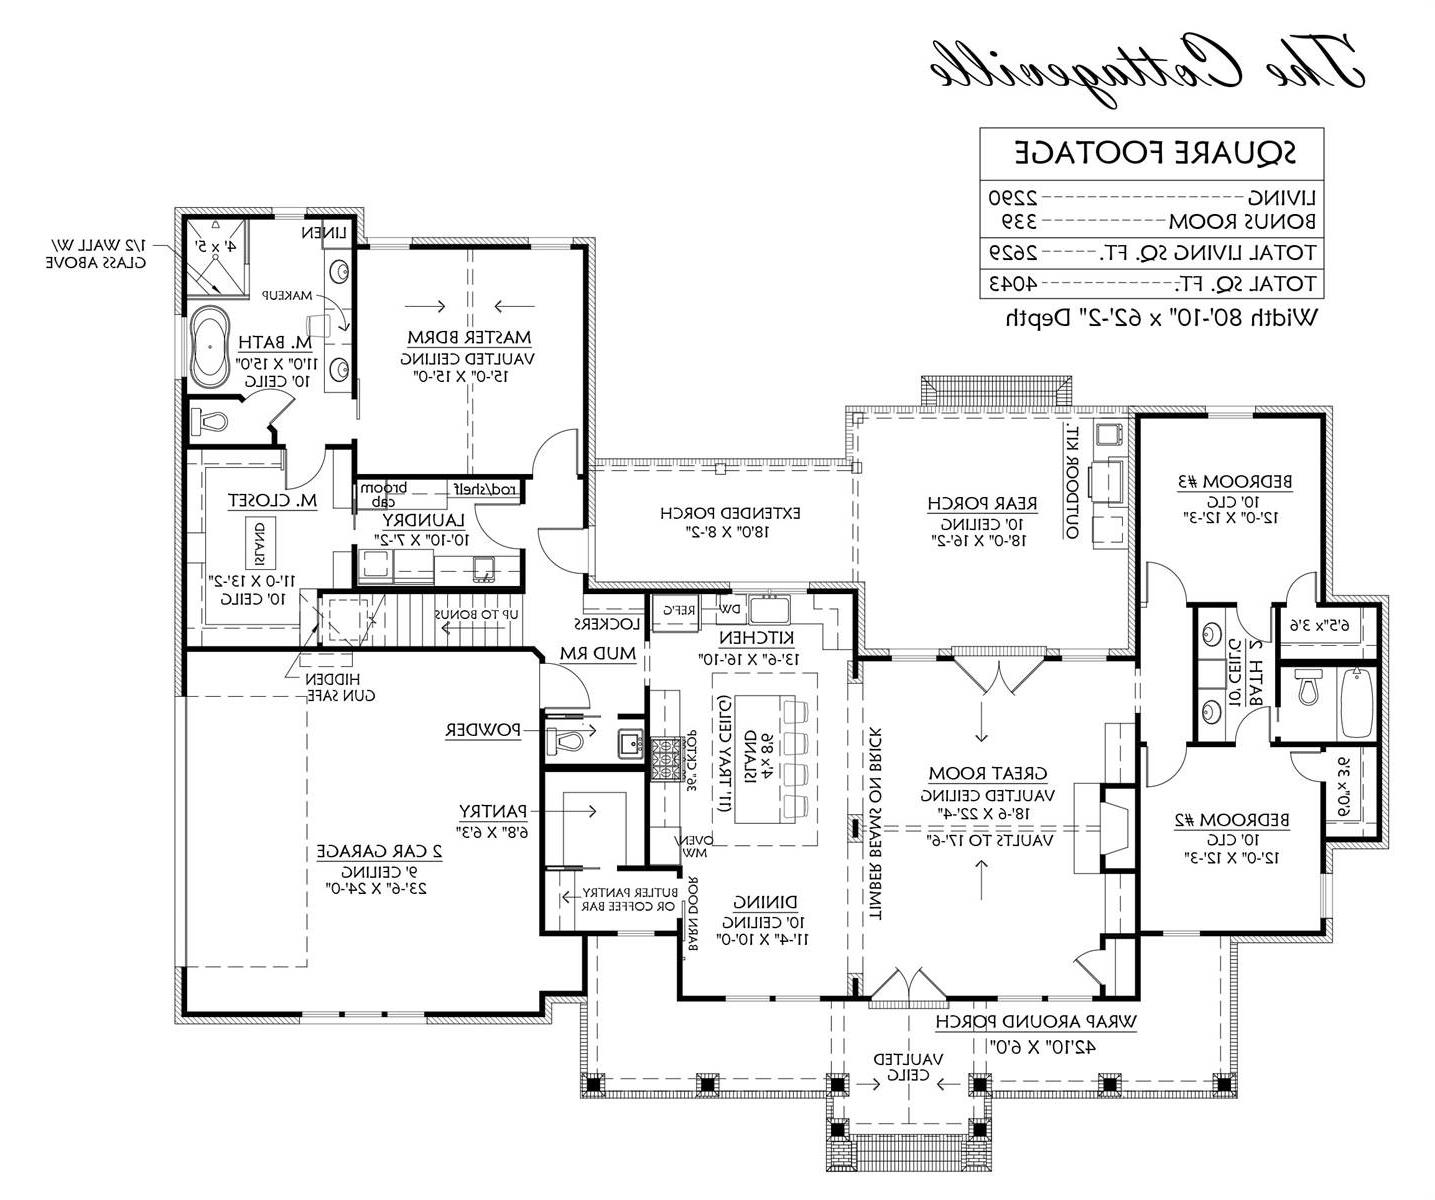 1st Floor image of Cottageville House Plan